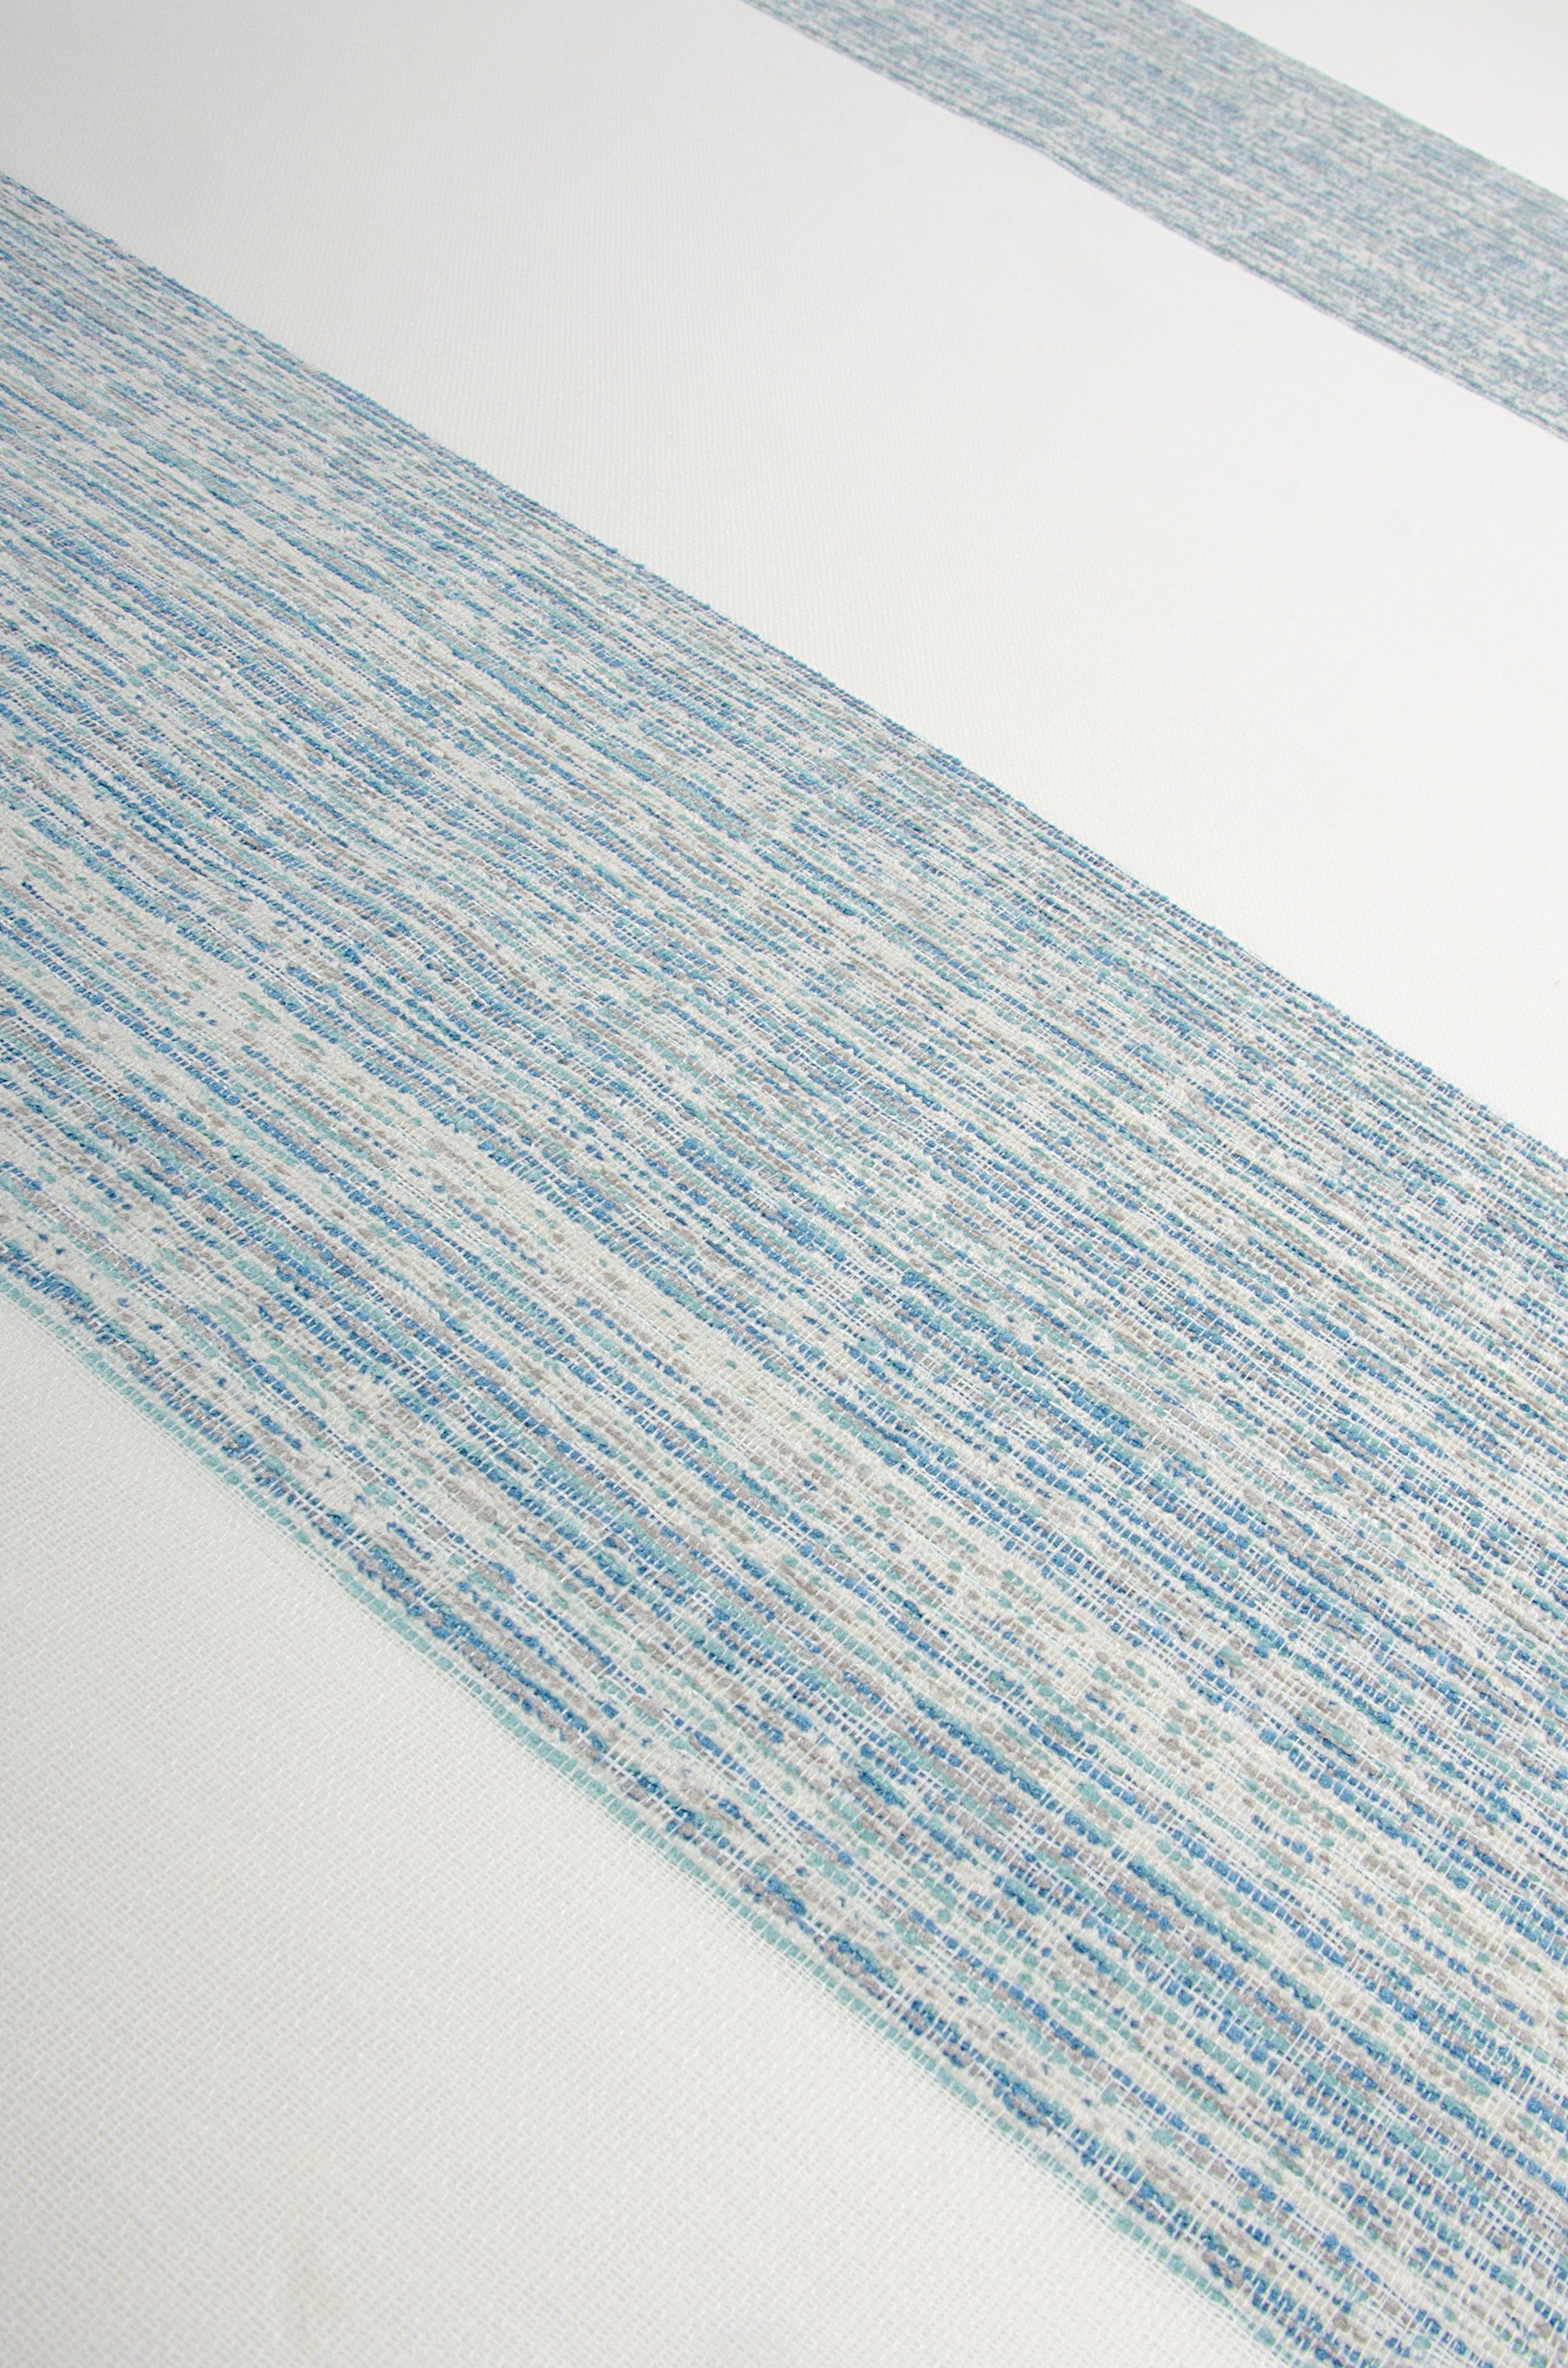 St), Jacquard, Ösen for you!, moderner (1 halbtransparent, Streifen Vorhang Neutex Cara, mit Effektstruktur blau